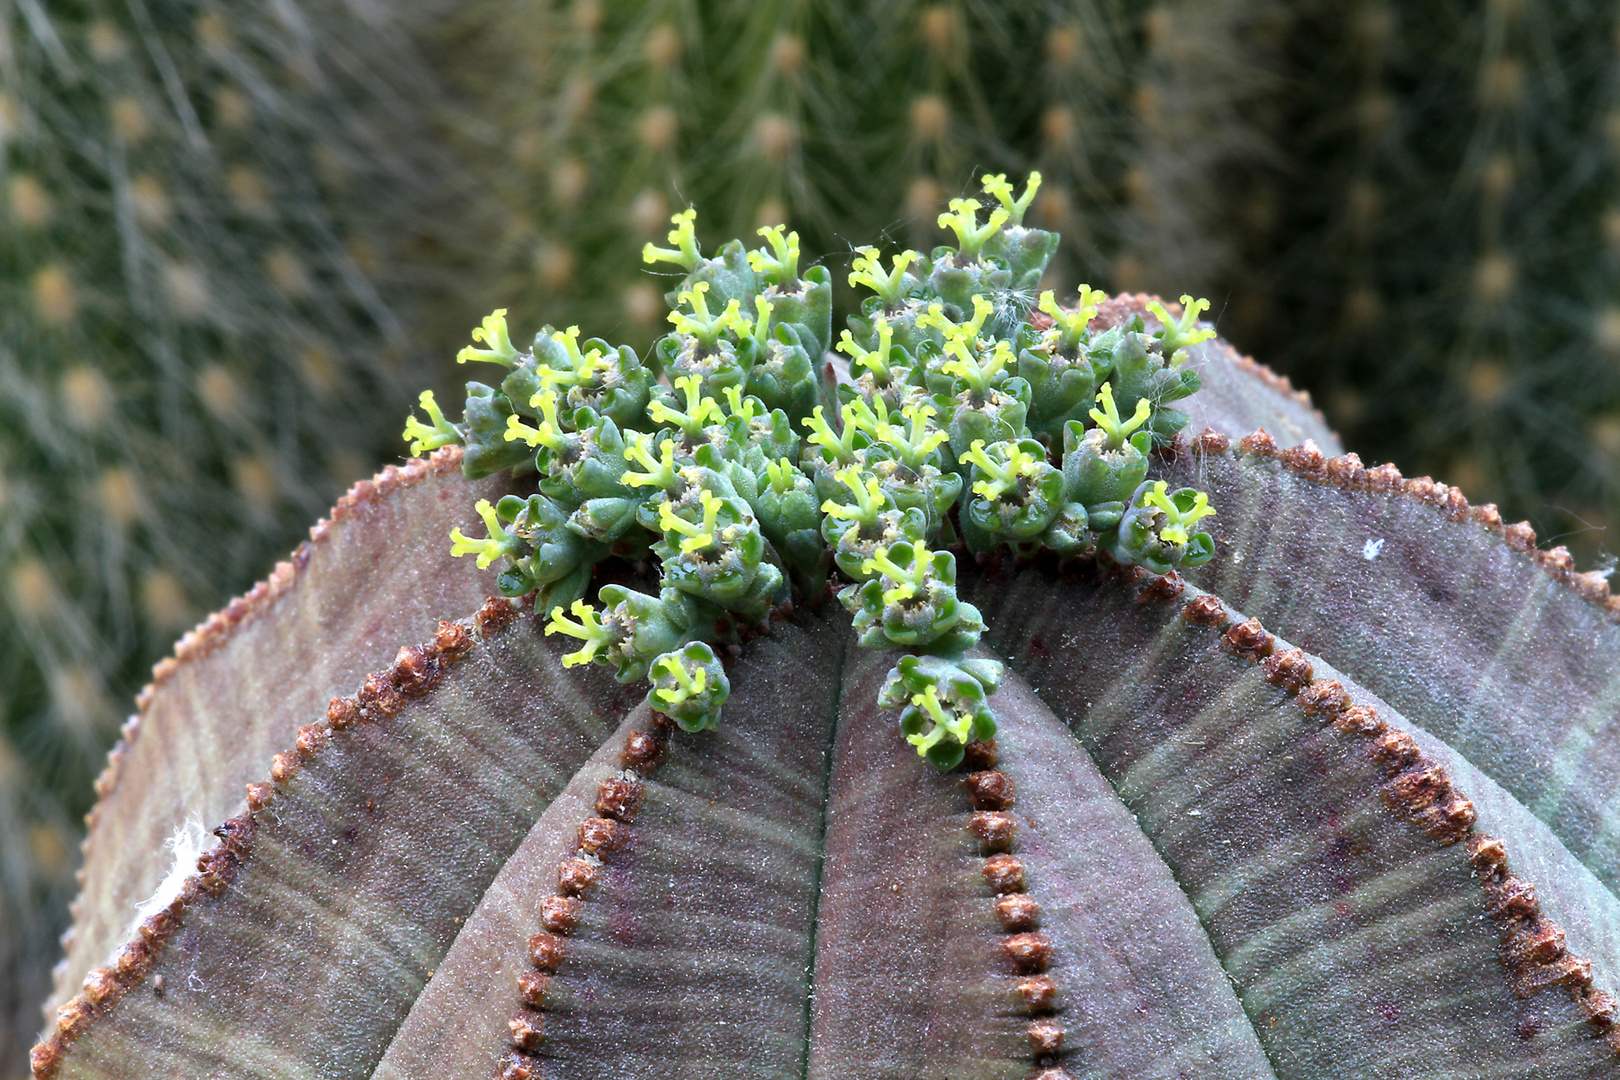 Euphorbia Obesa!